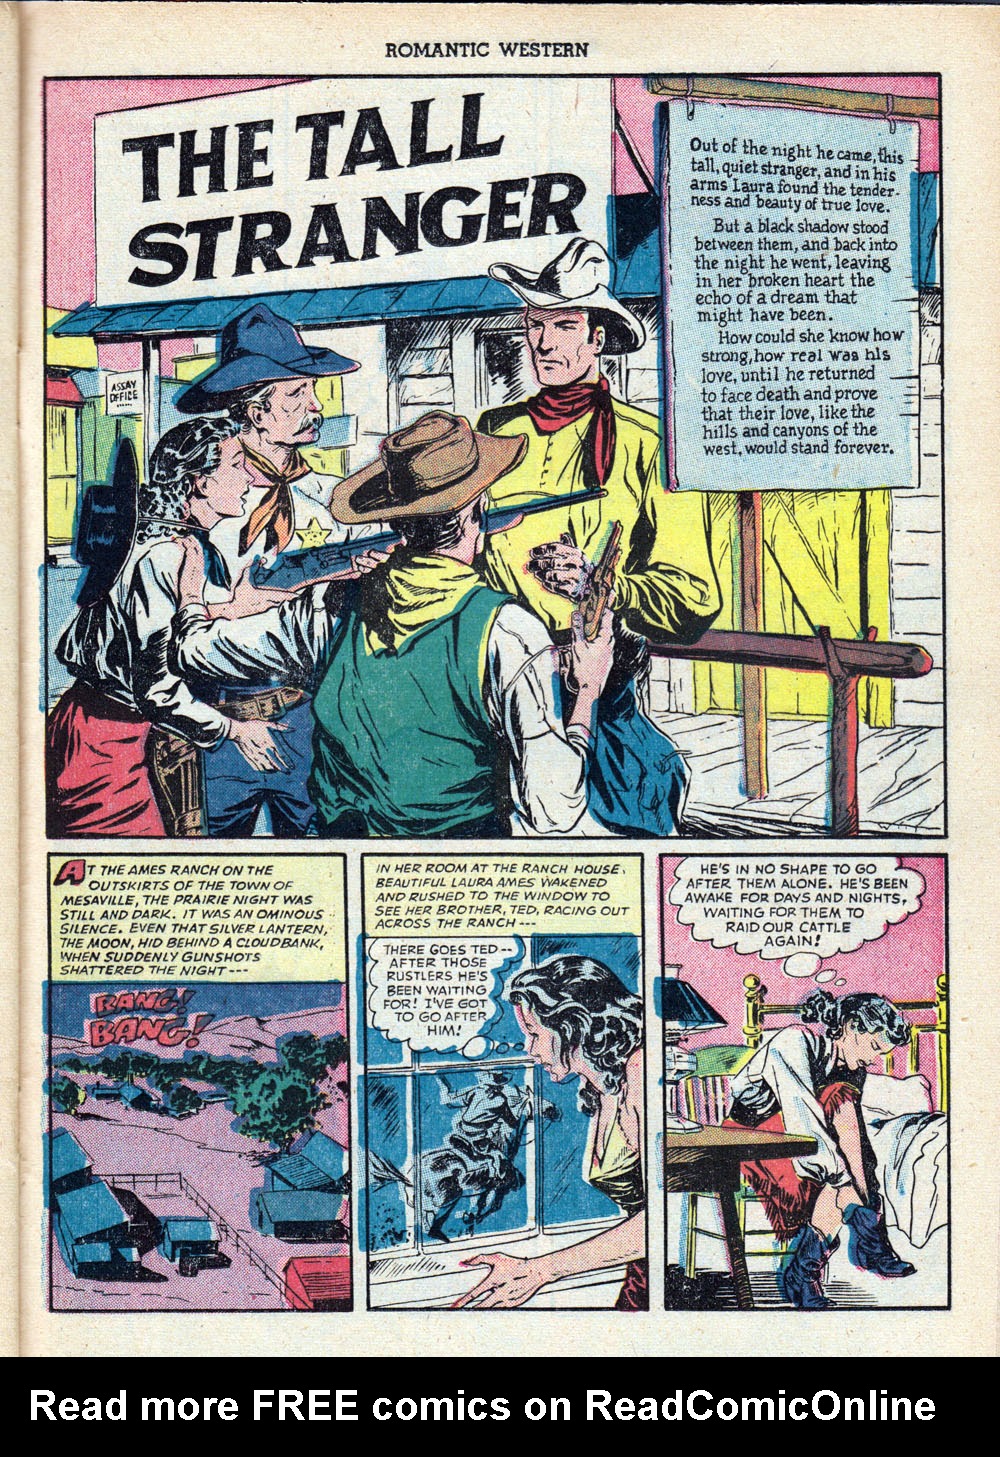 Read online Romantic Western comic -  Issue #1 - 25